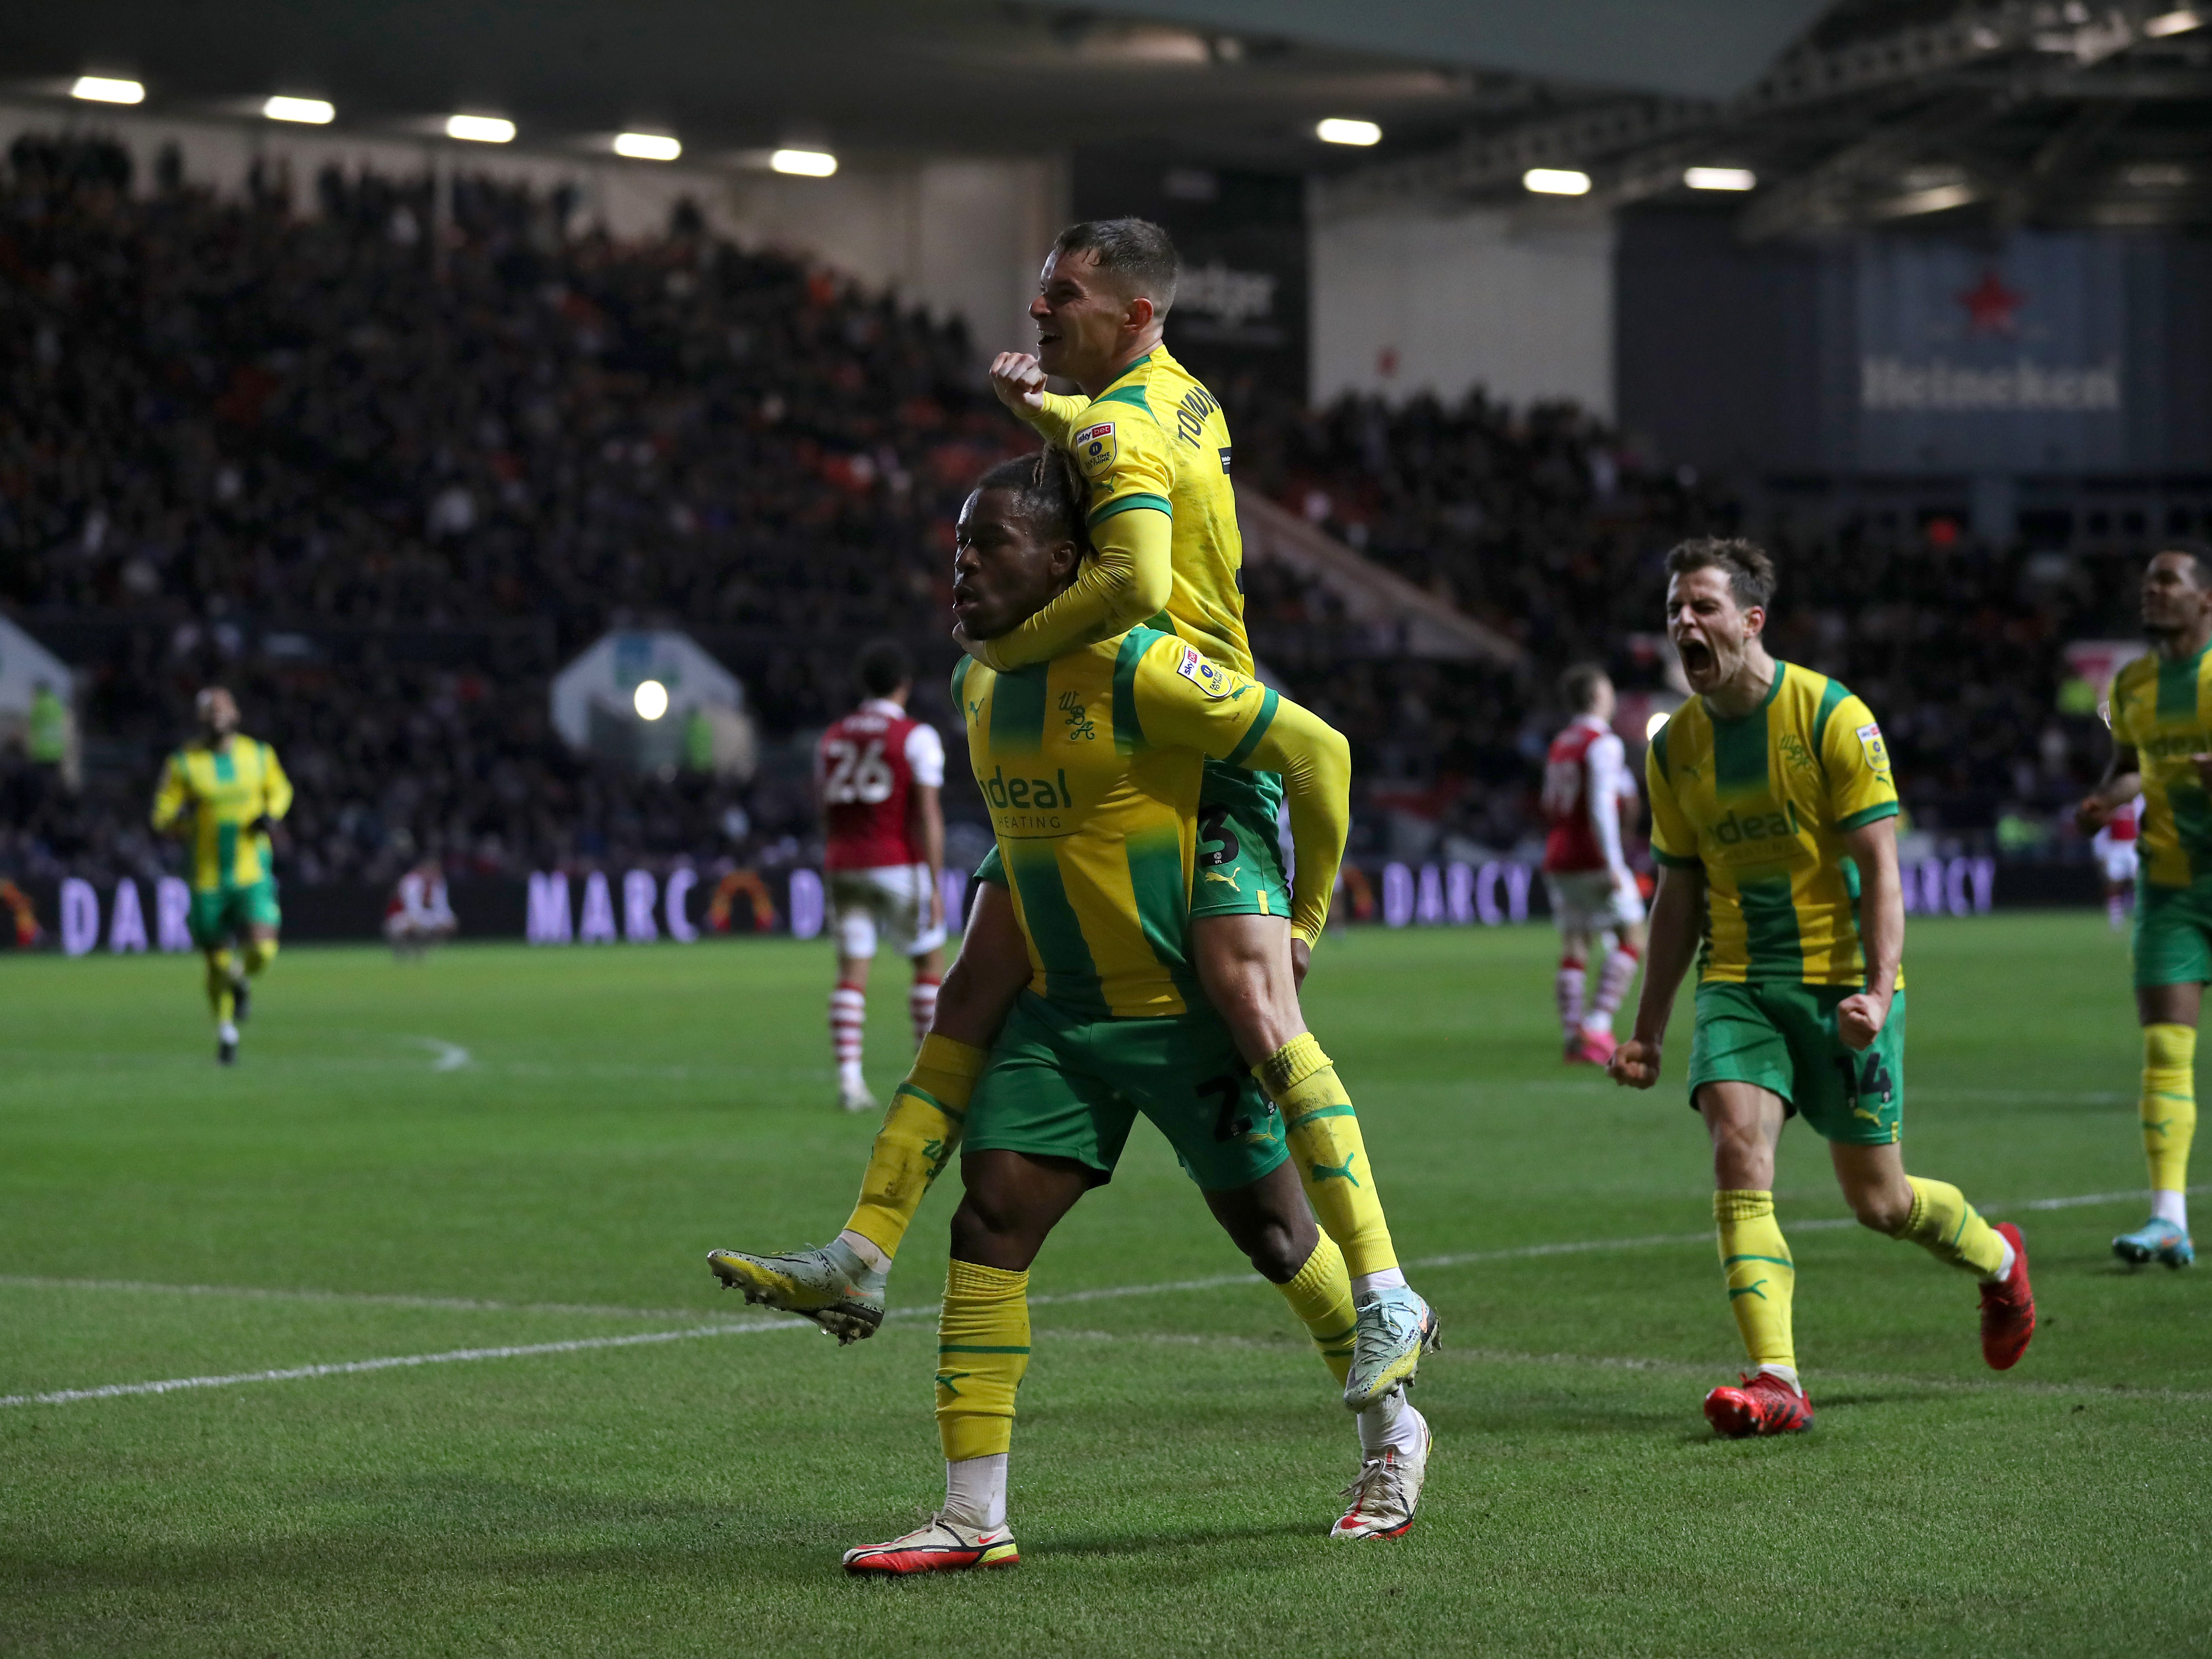 An image of Brandon Thomas-Asante celebrating his goal at Bristol City